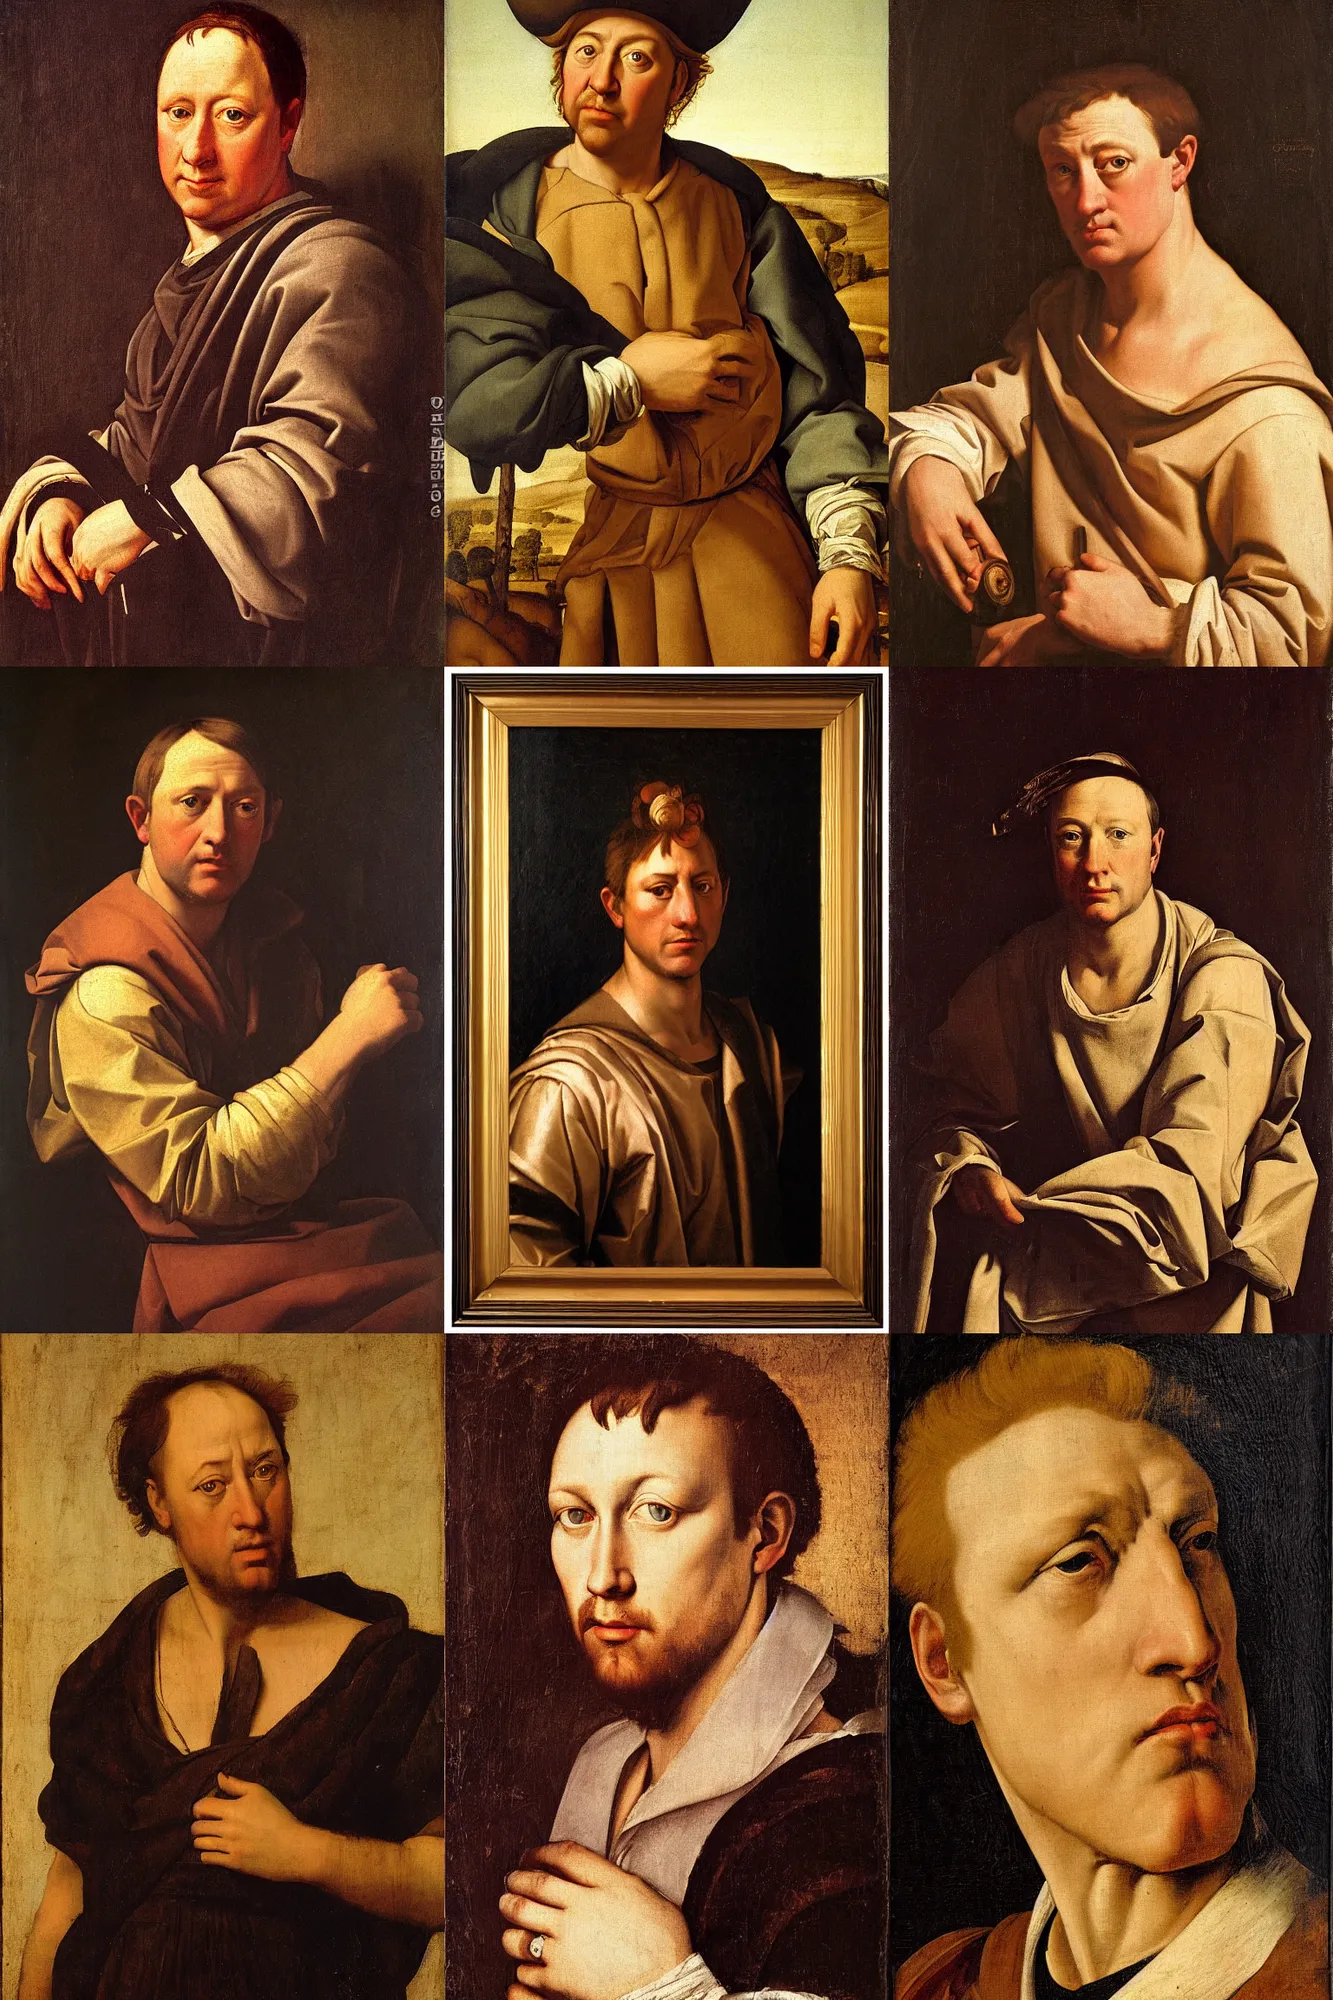 Prompt: joh lasseter portrait in renaissance style, by caravaggioo